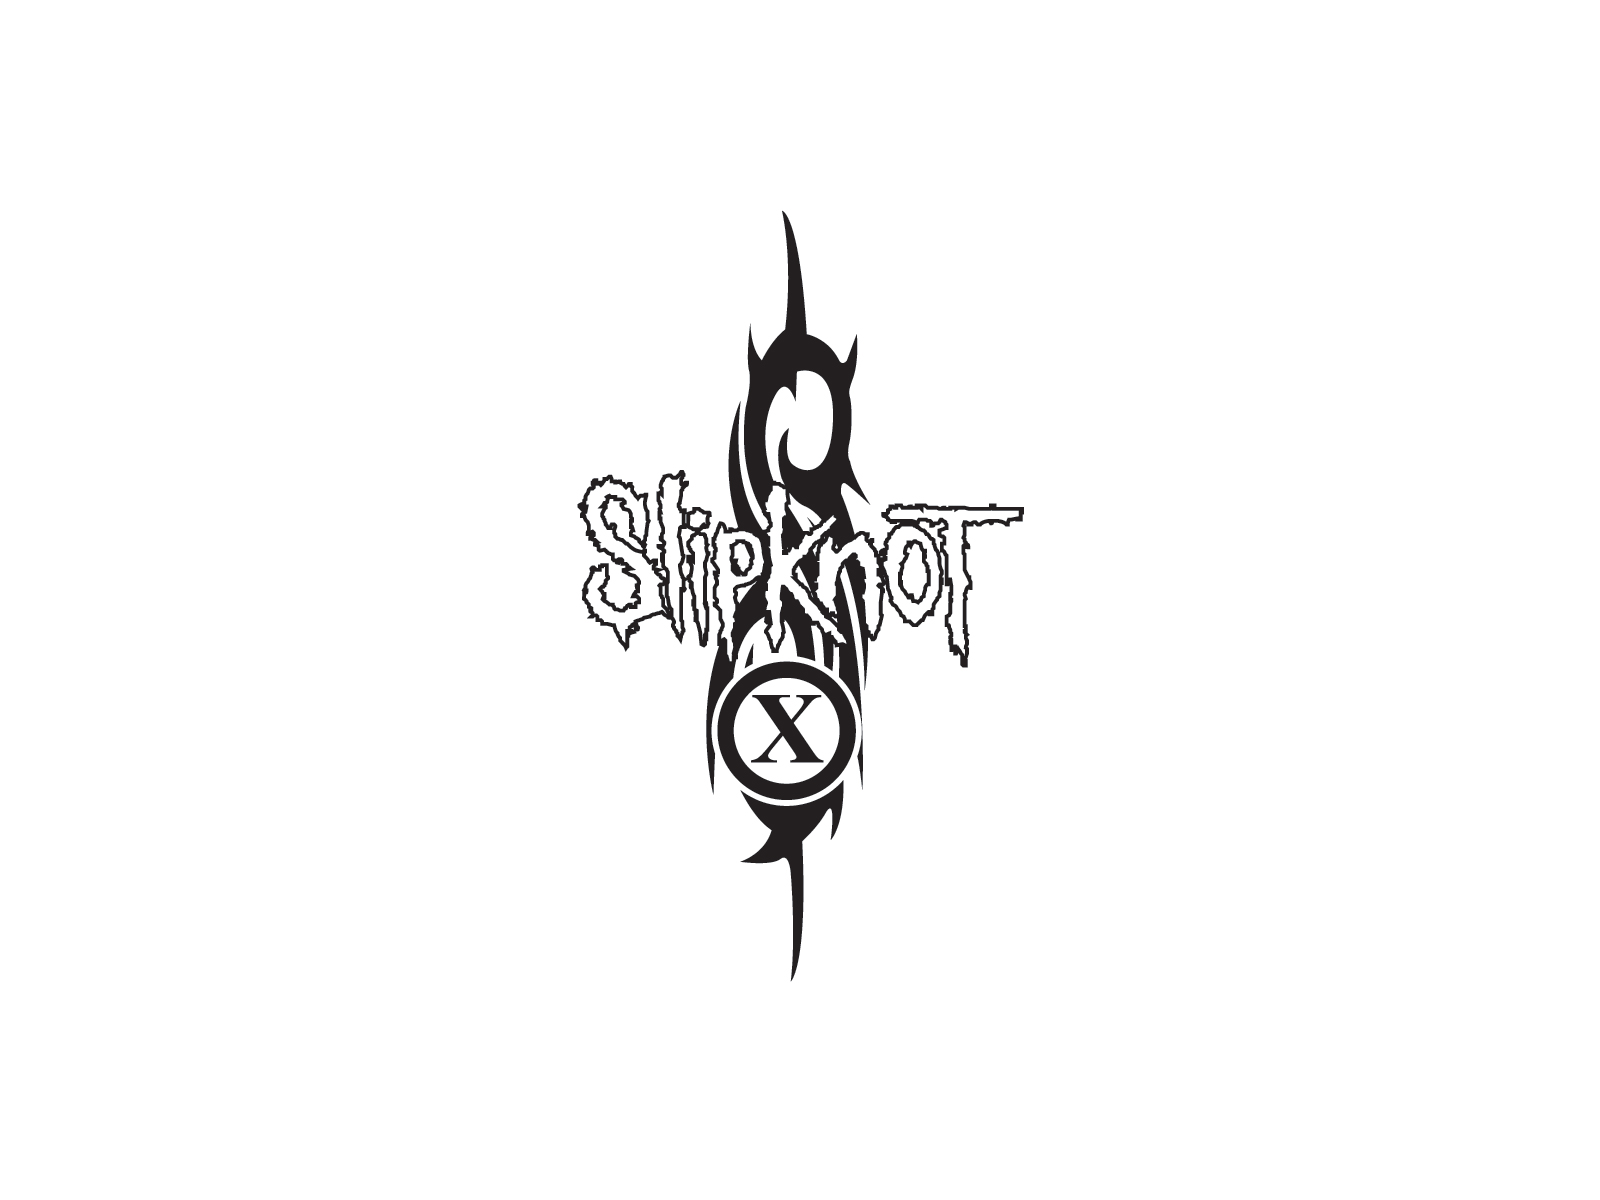 Slipknot wallpaper wallpaper of nu metal band Slipknot 1600x1200